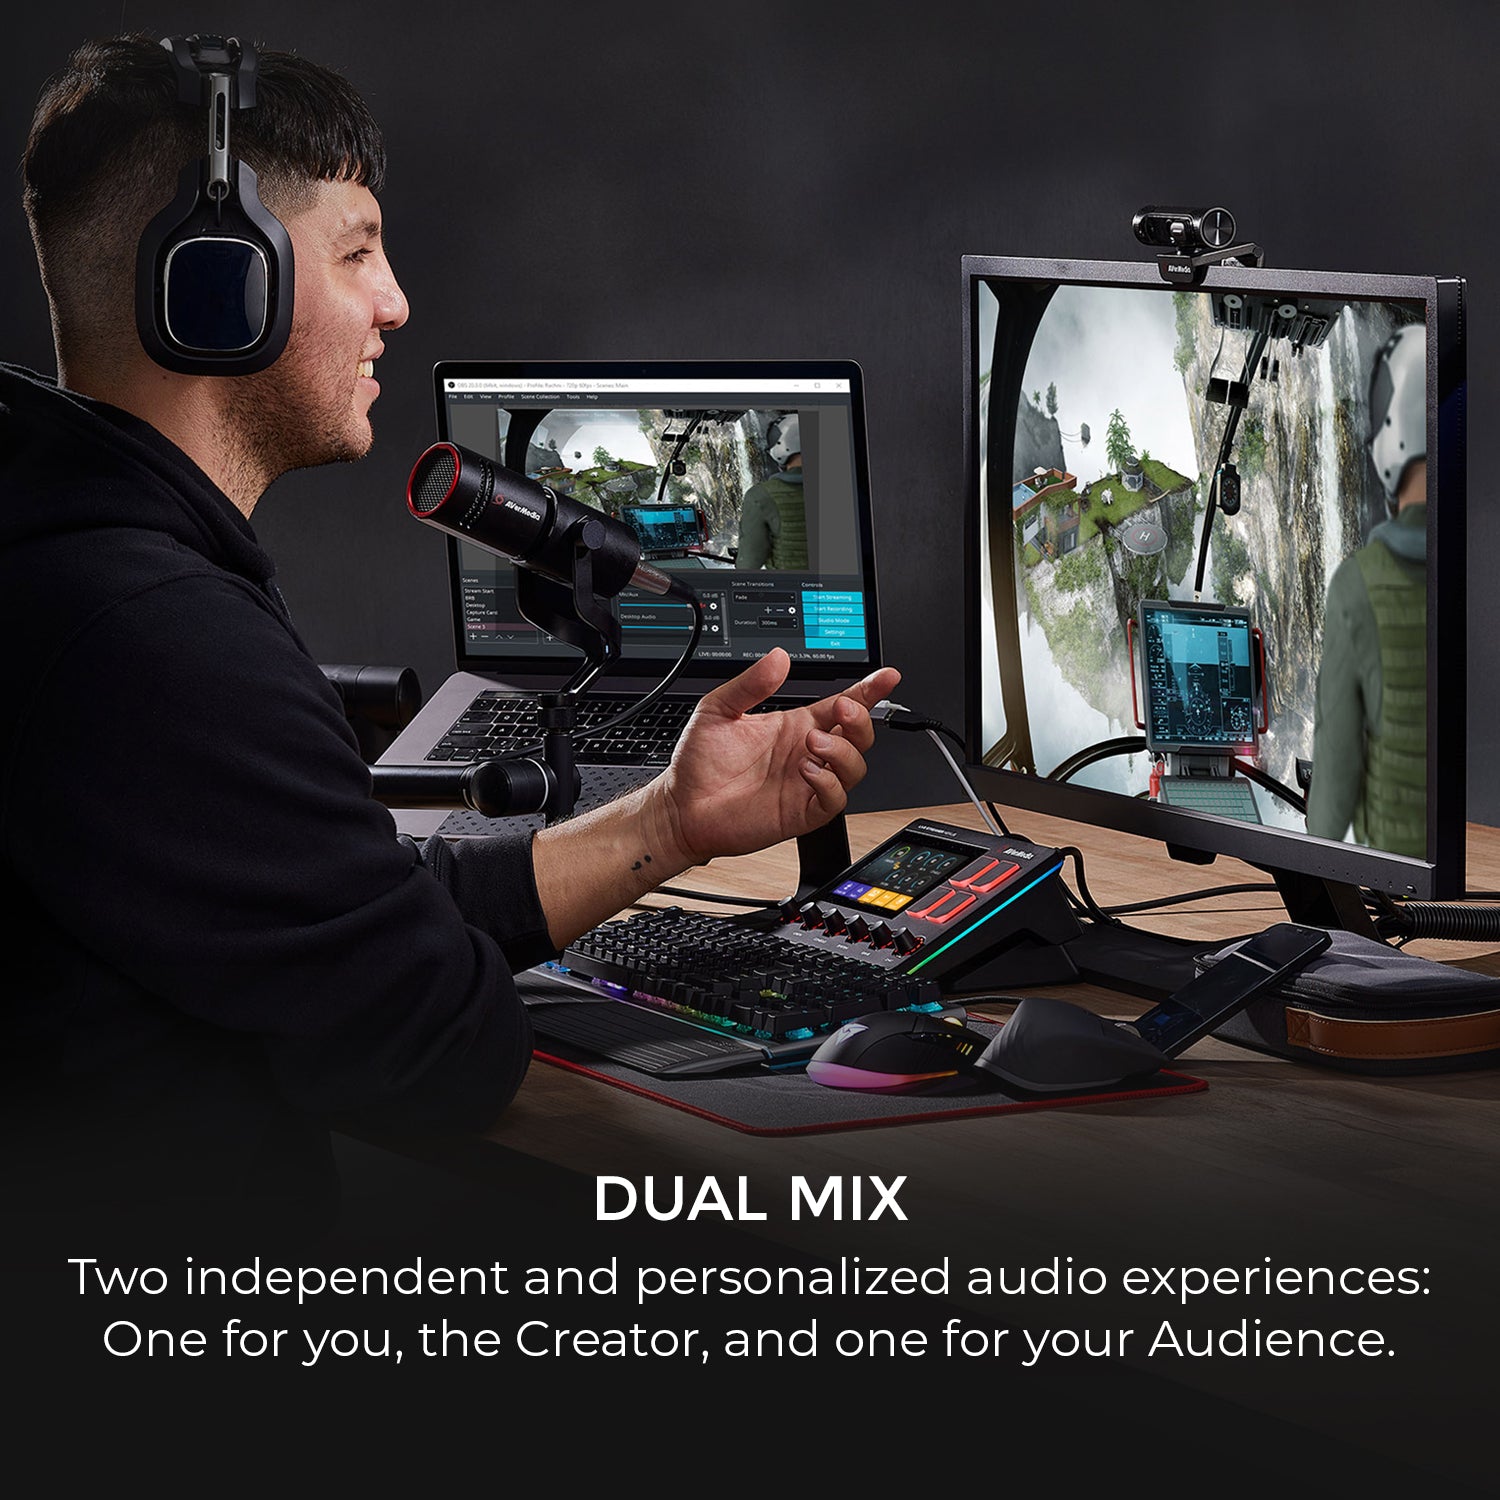 AVerMedia AX310 Live Streamer Creater's Control Center